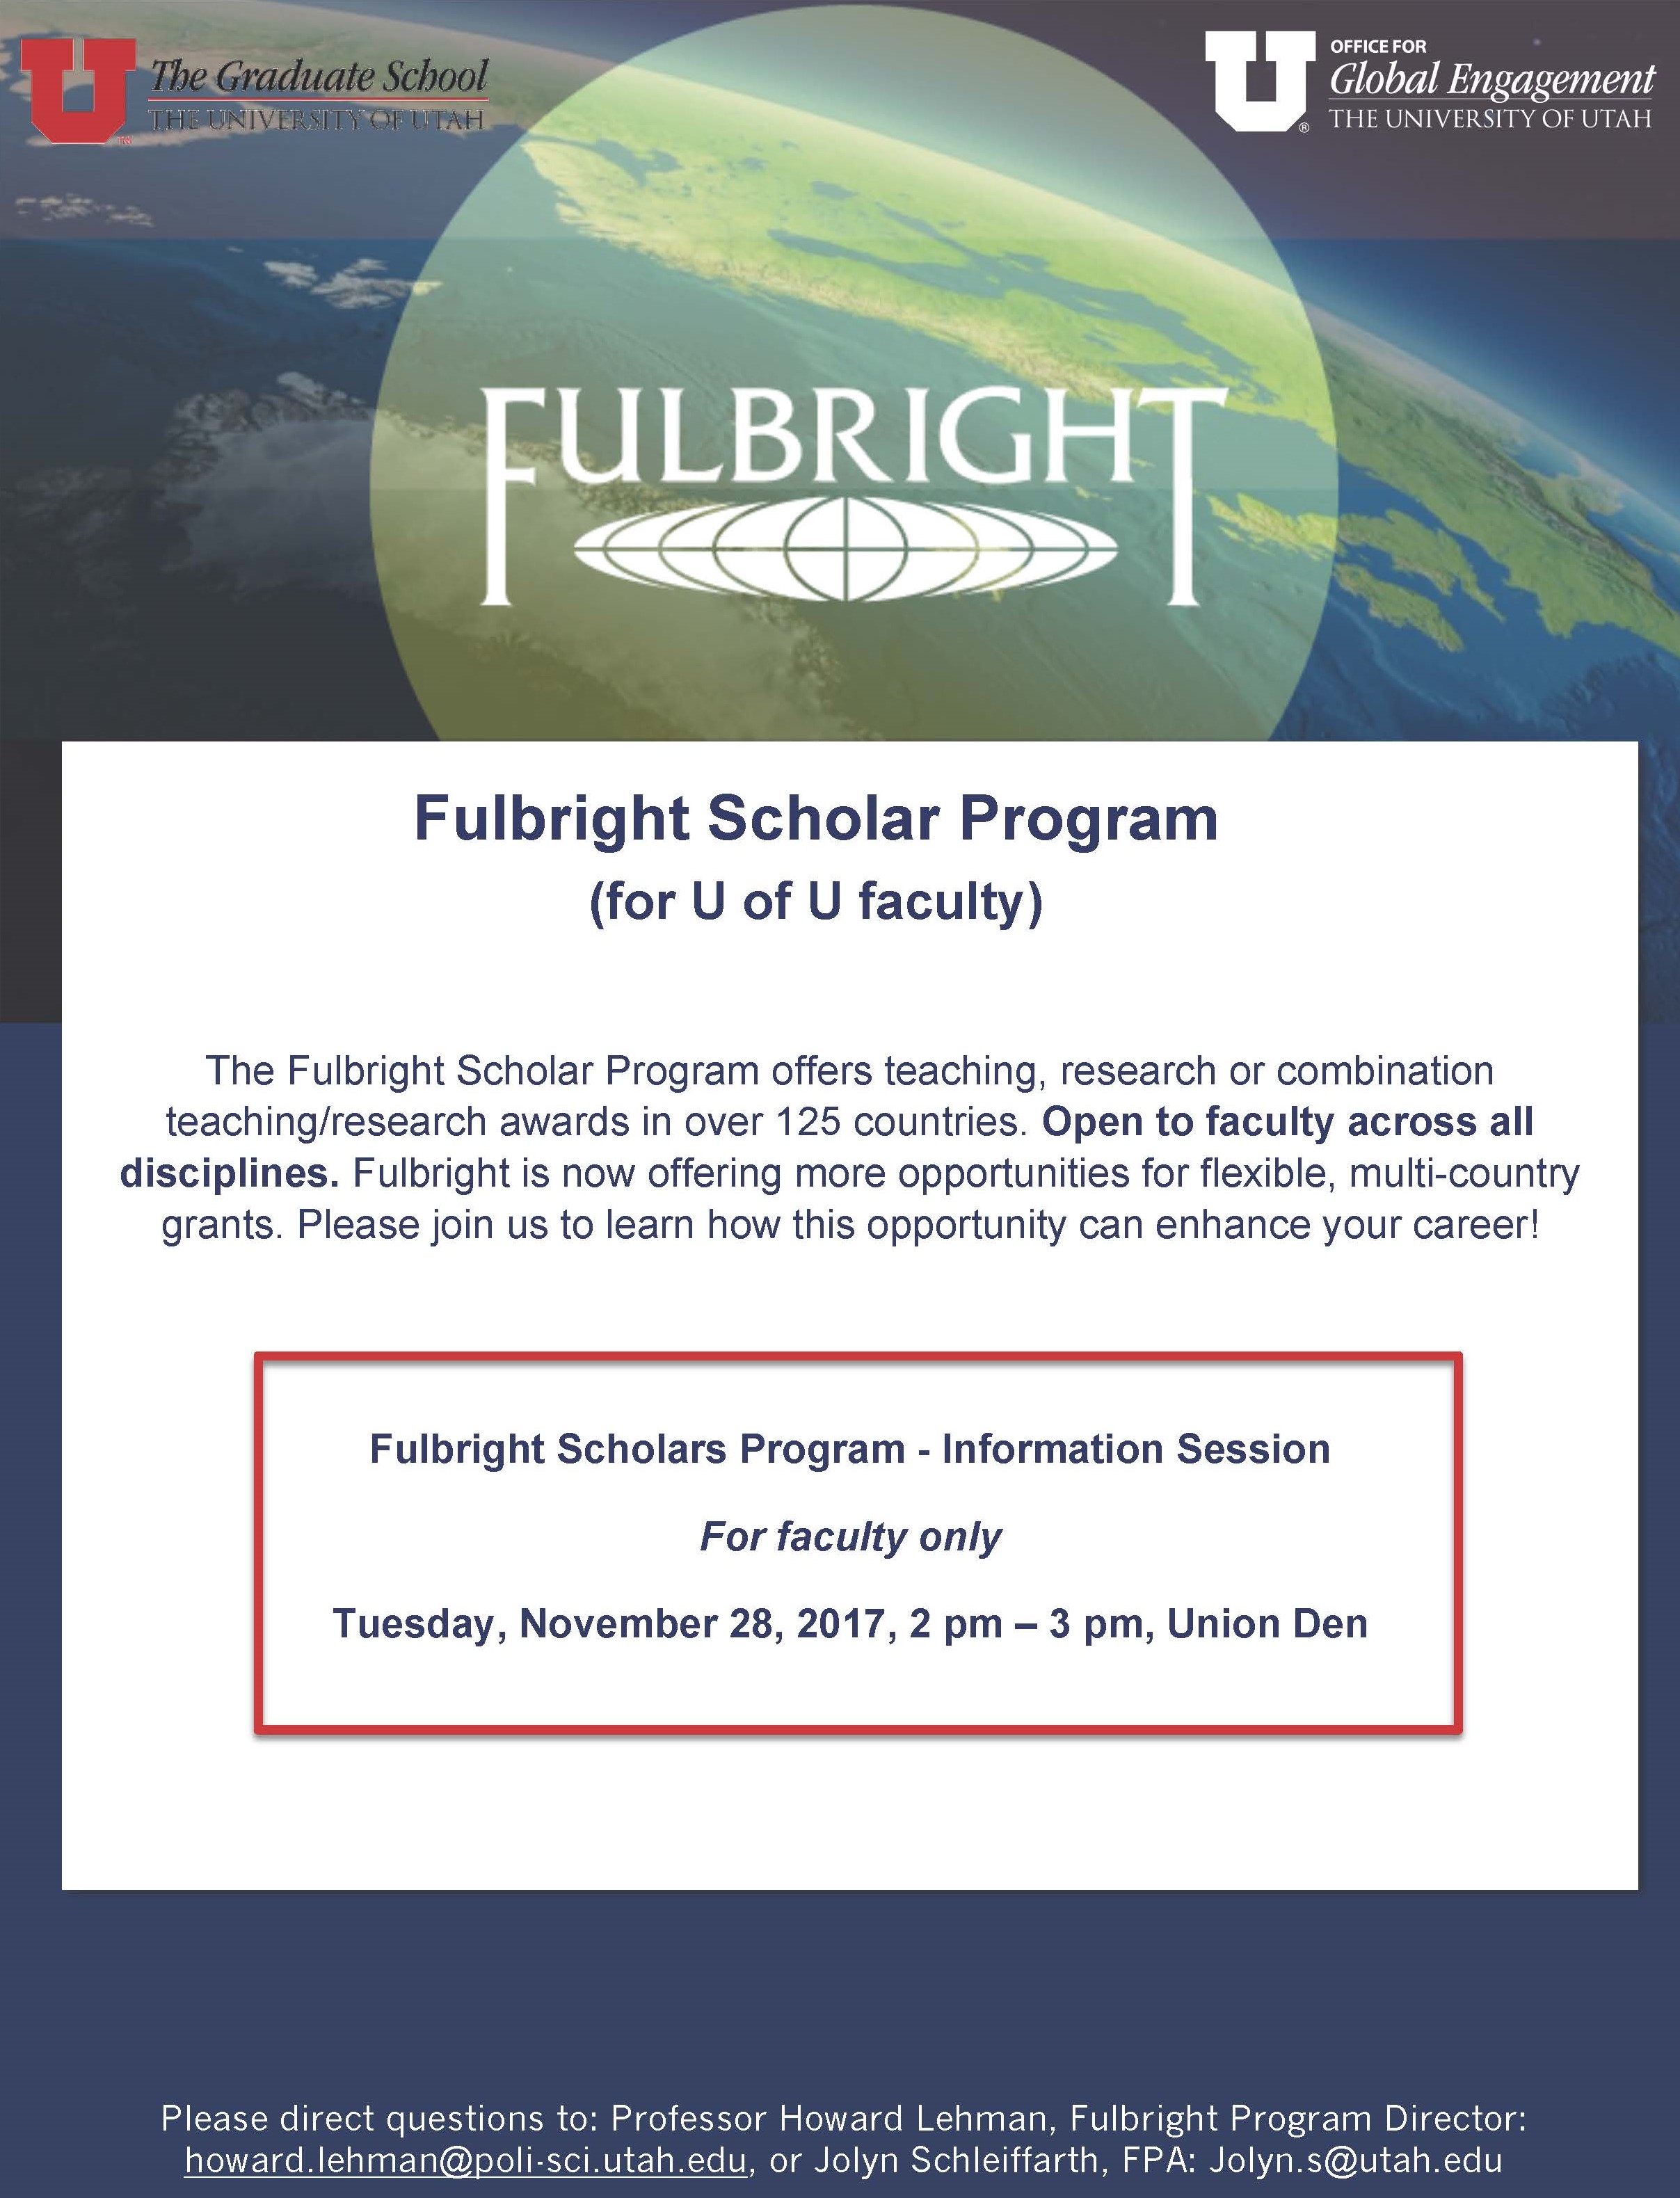 Fulbright Scholar Program for U faculty